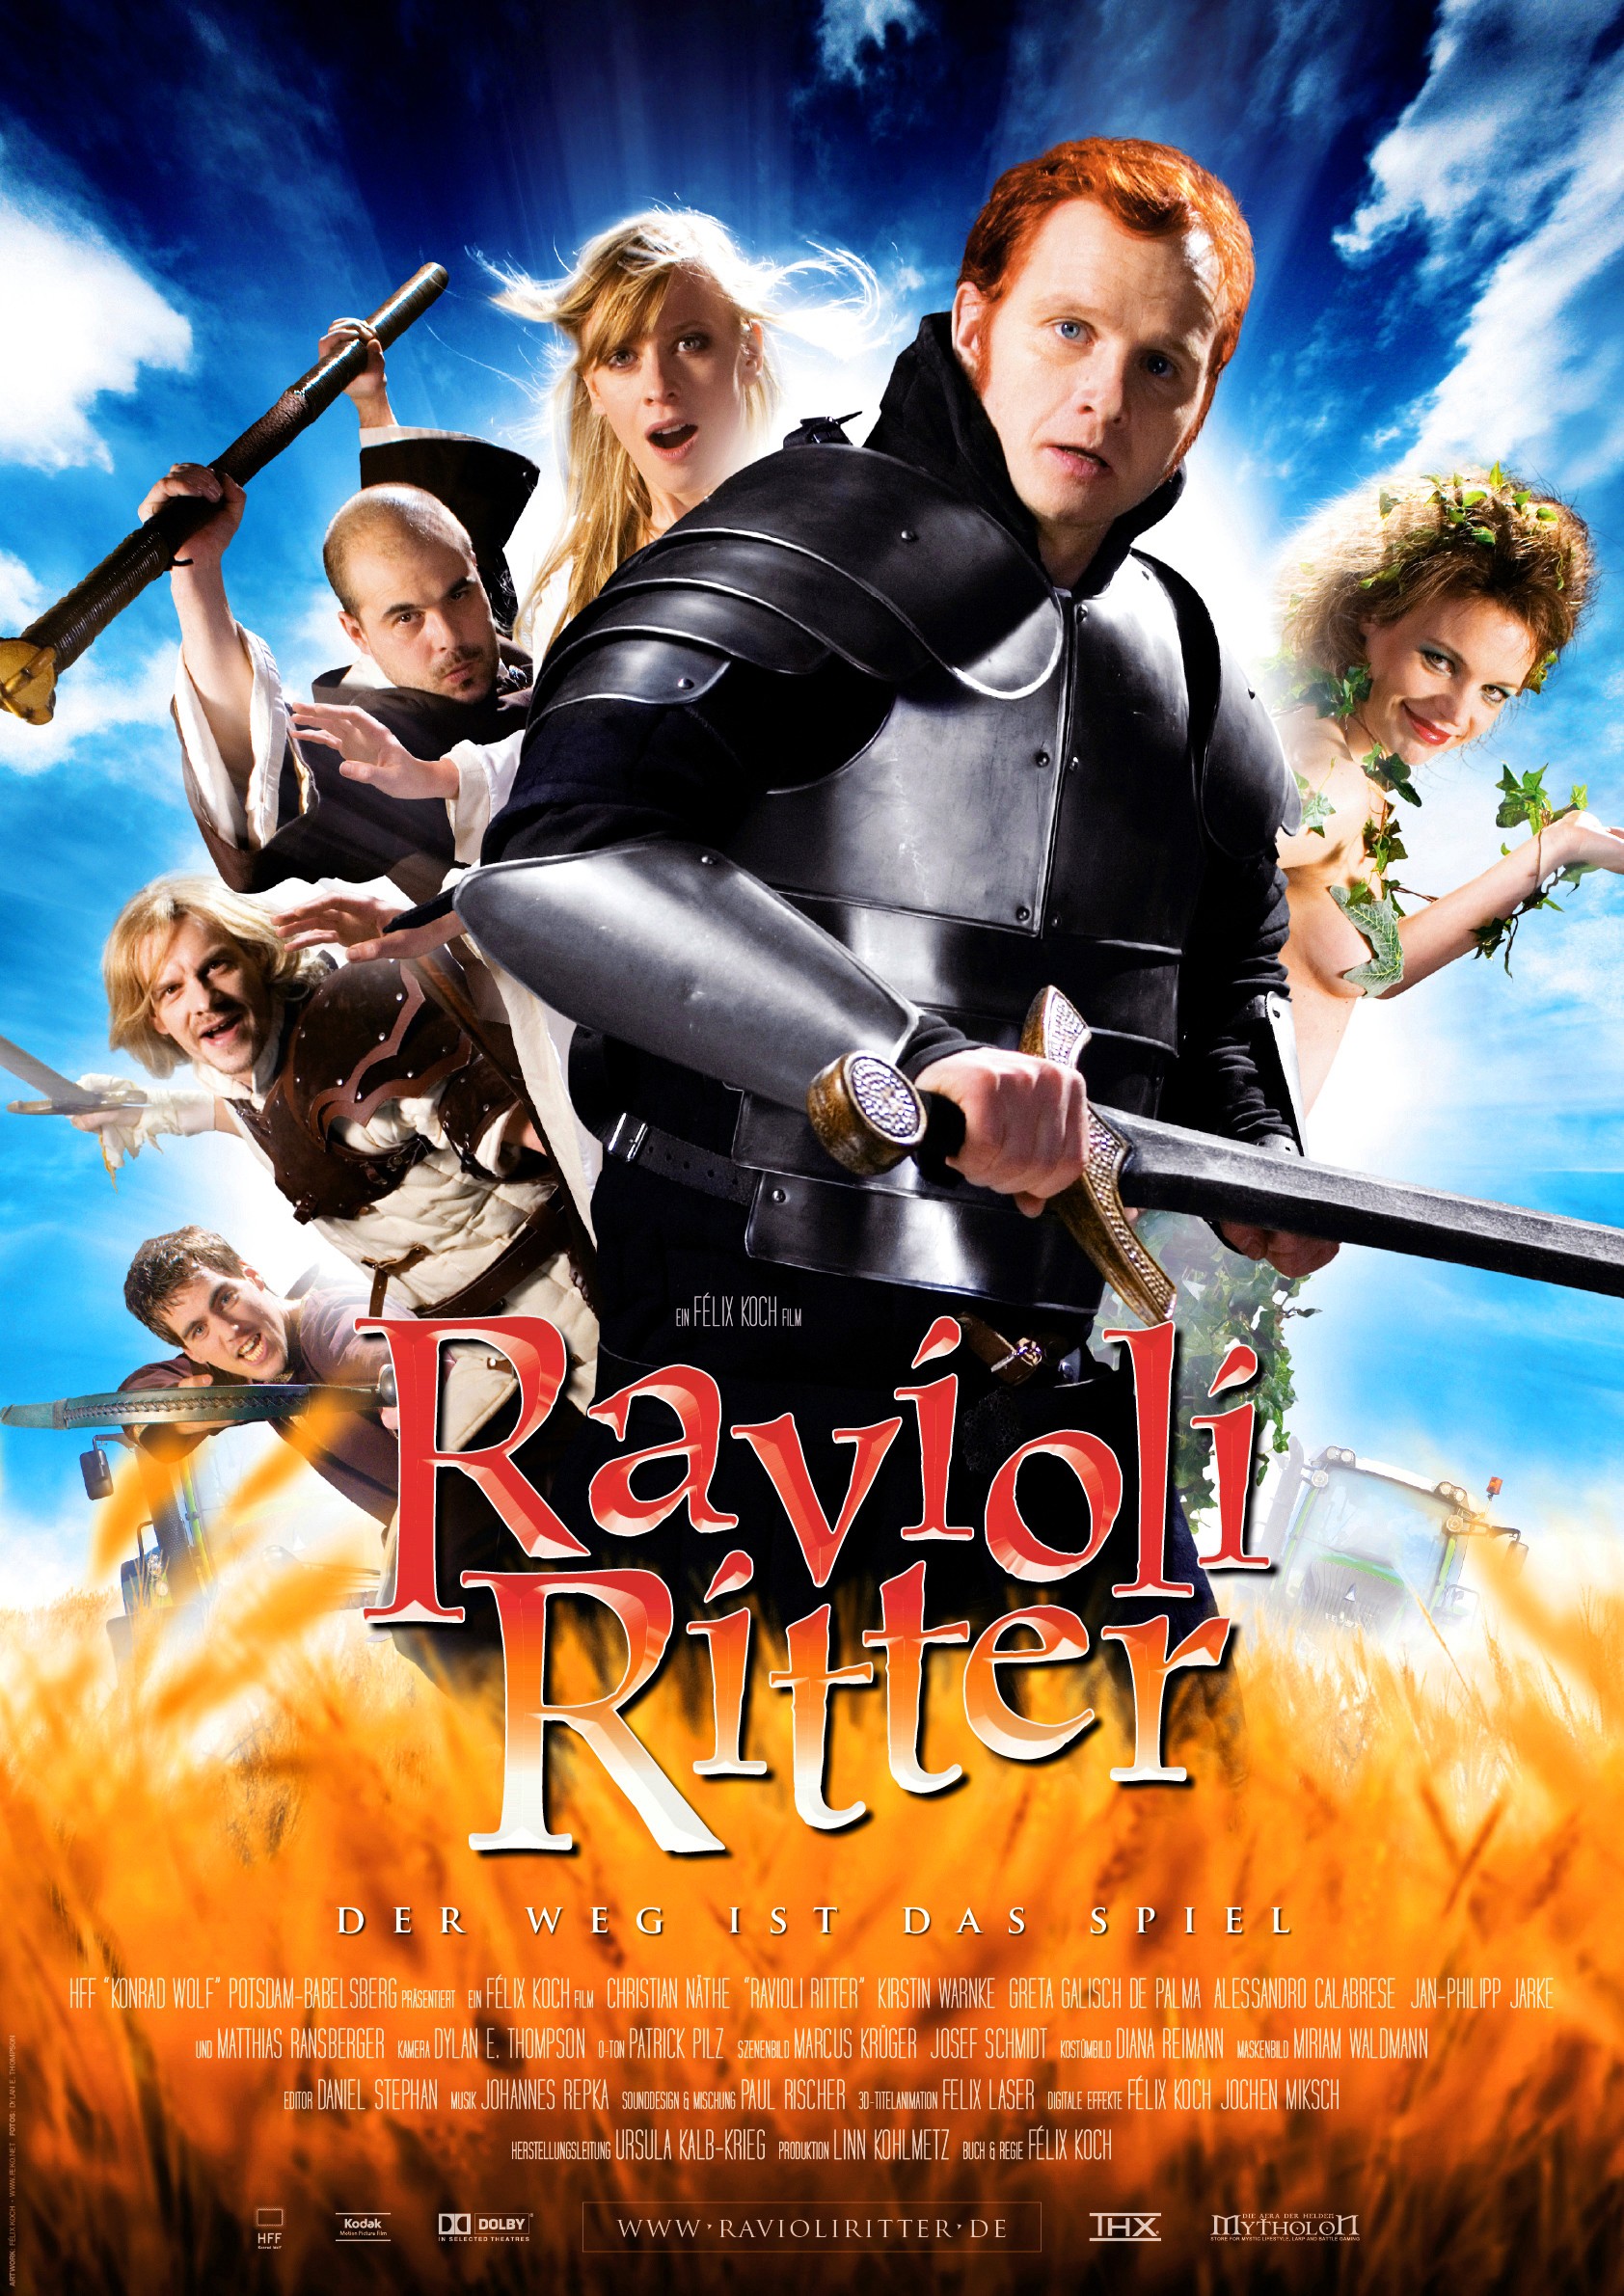 Mega Sized Movie Poster Image for Ravioli Ritter